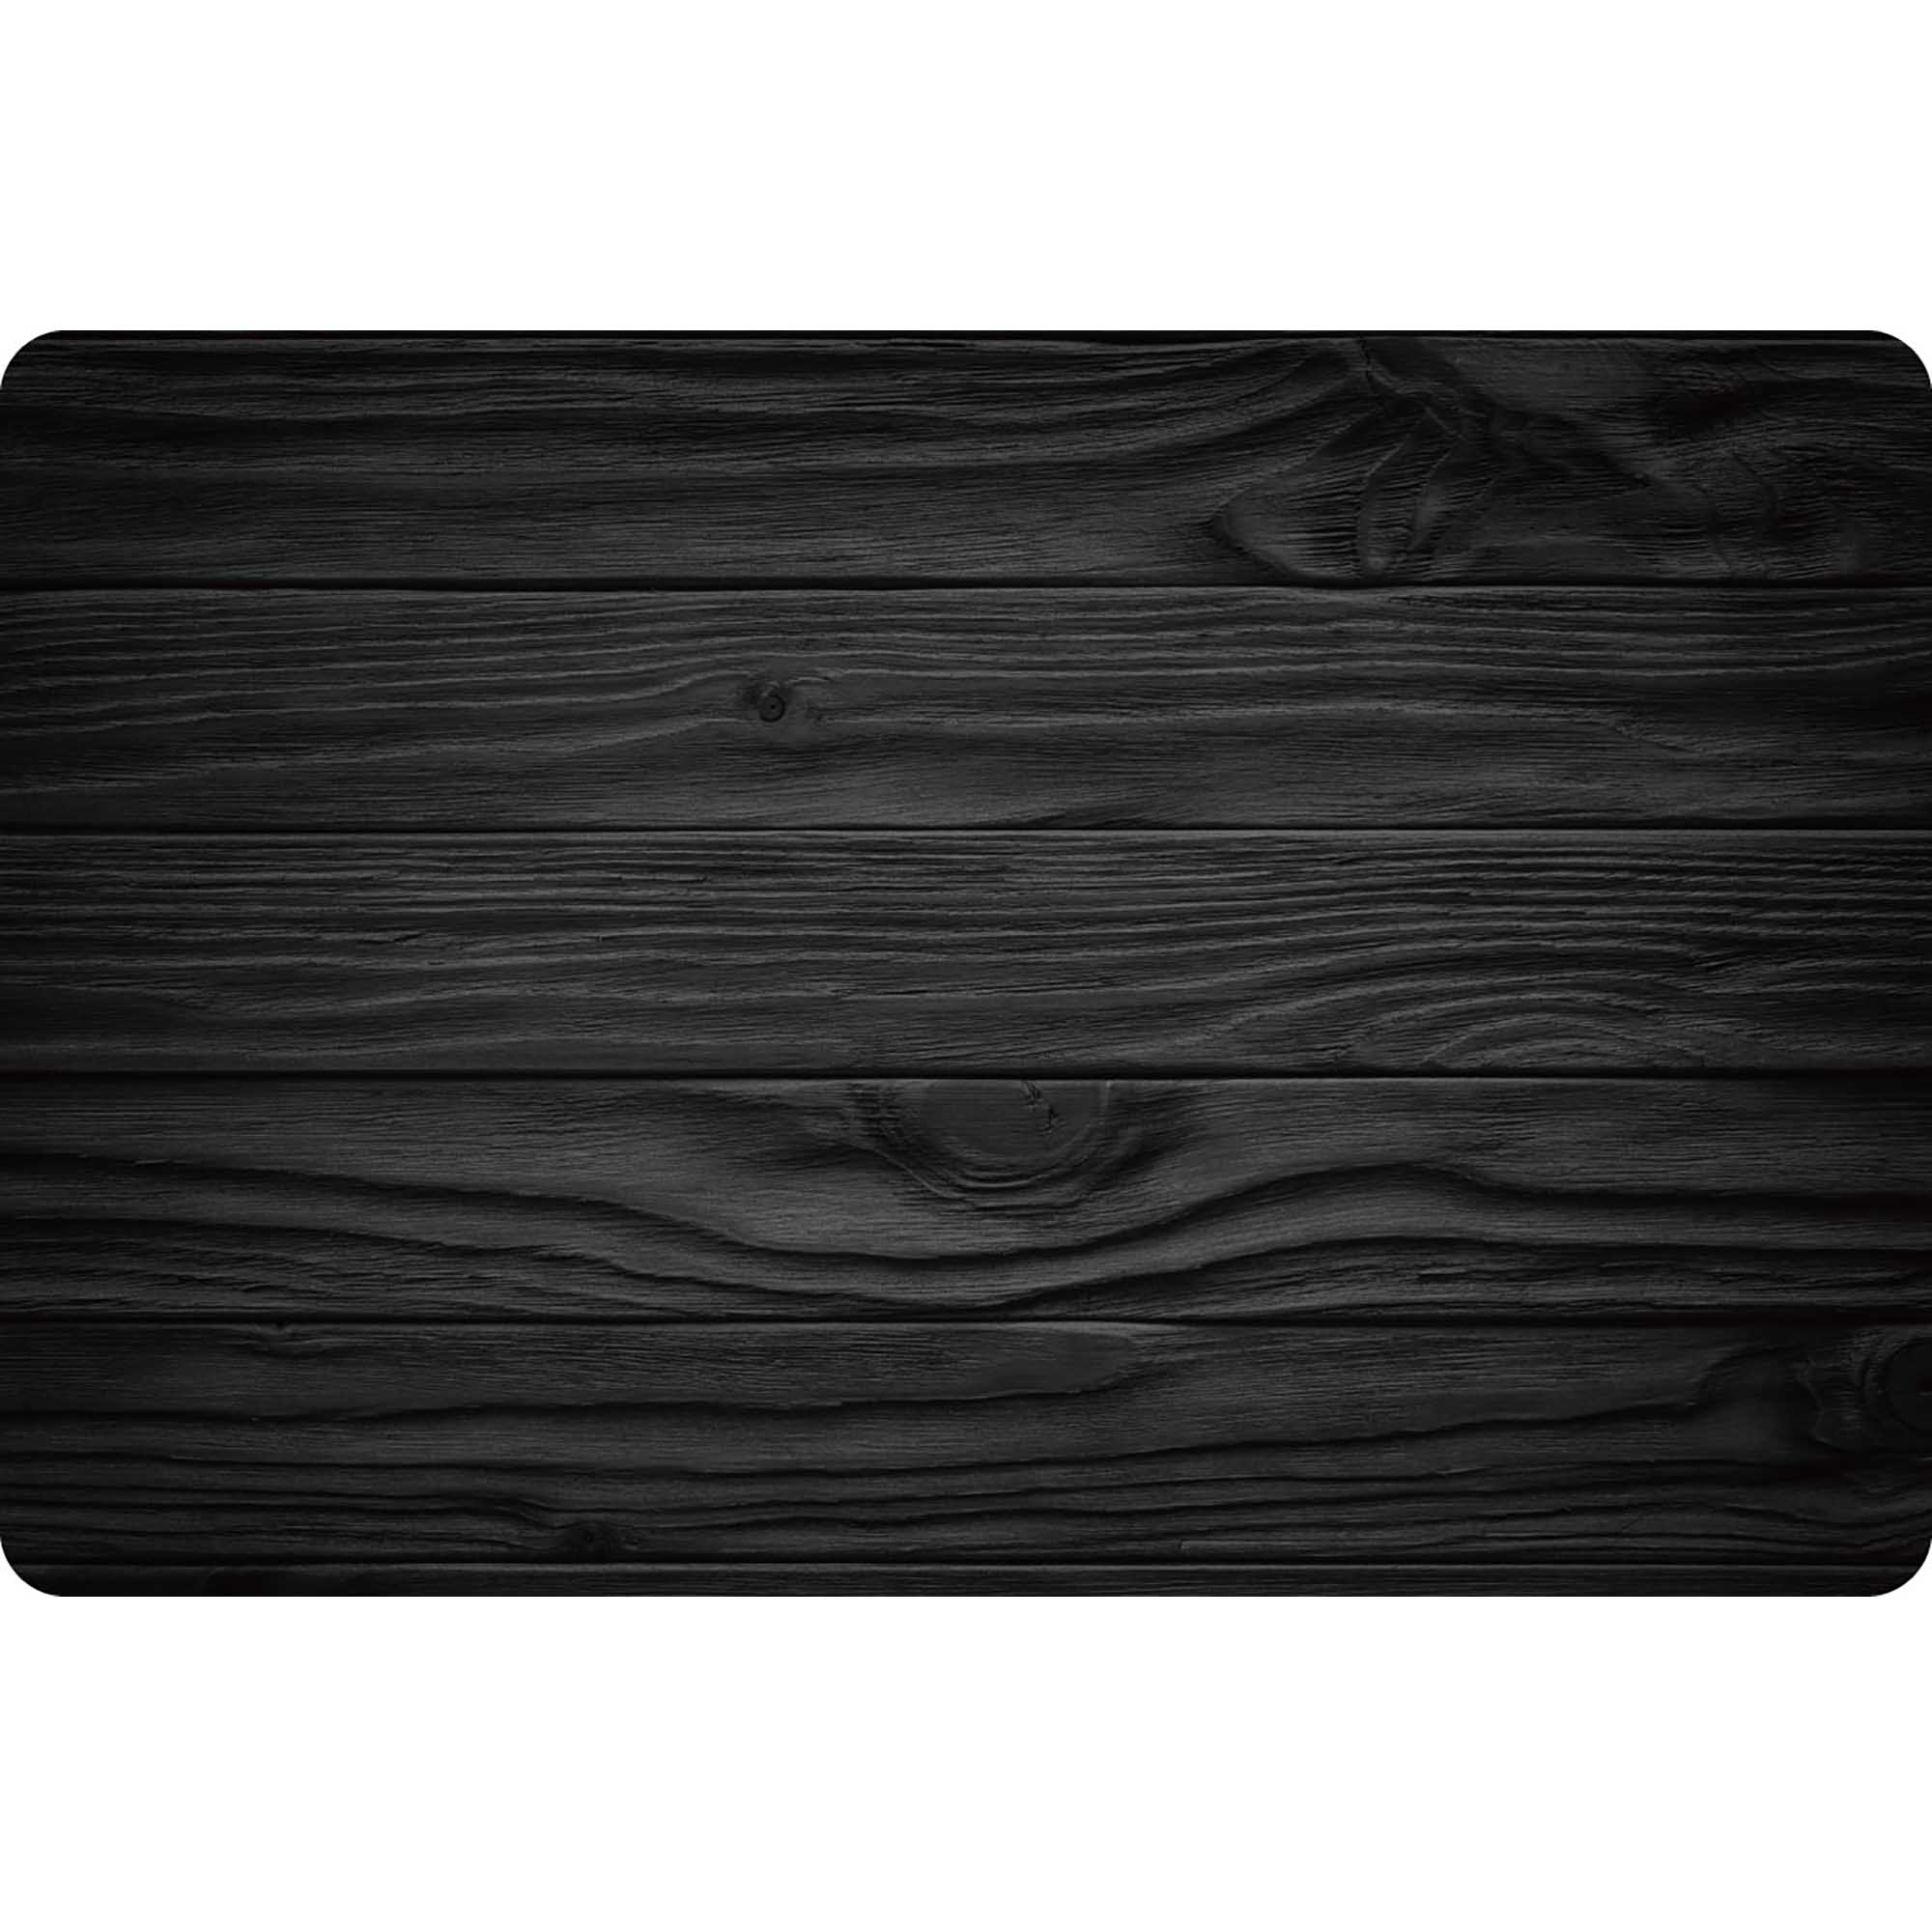 Wood Look Printed Black Placemat 17x11.2in